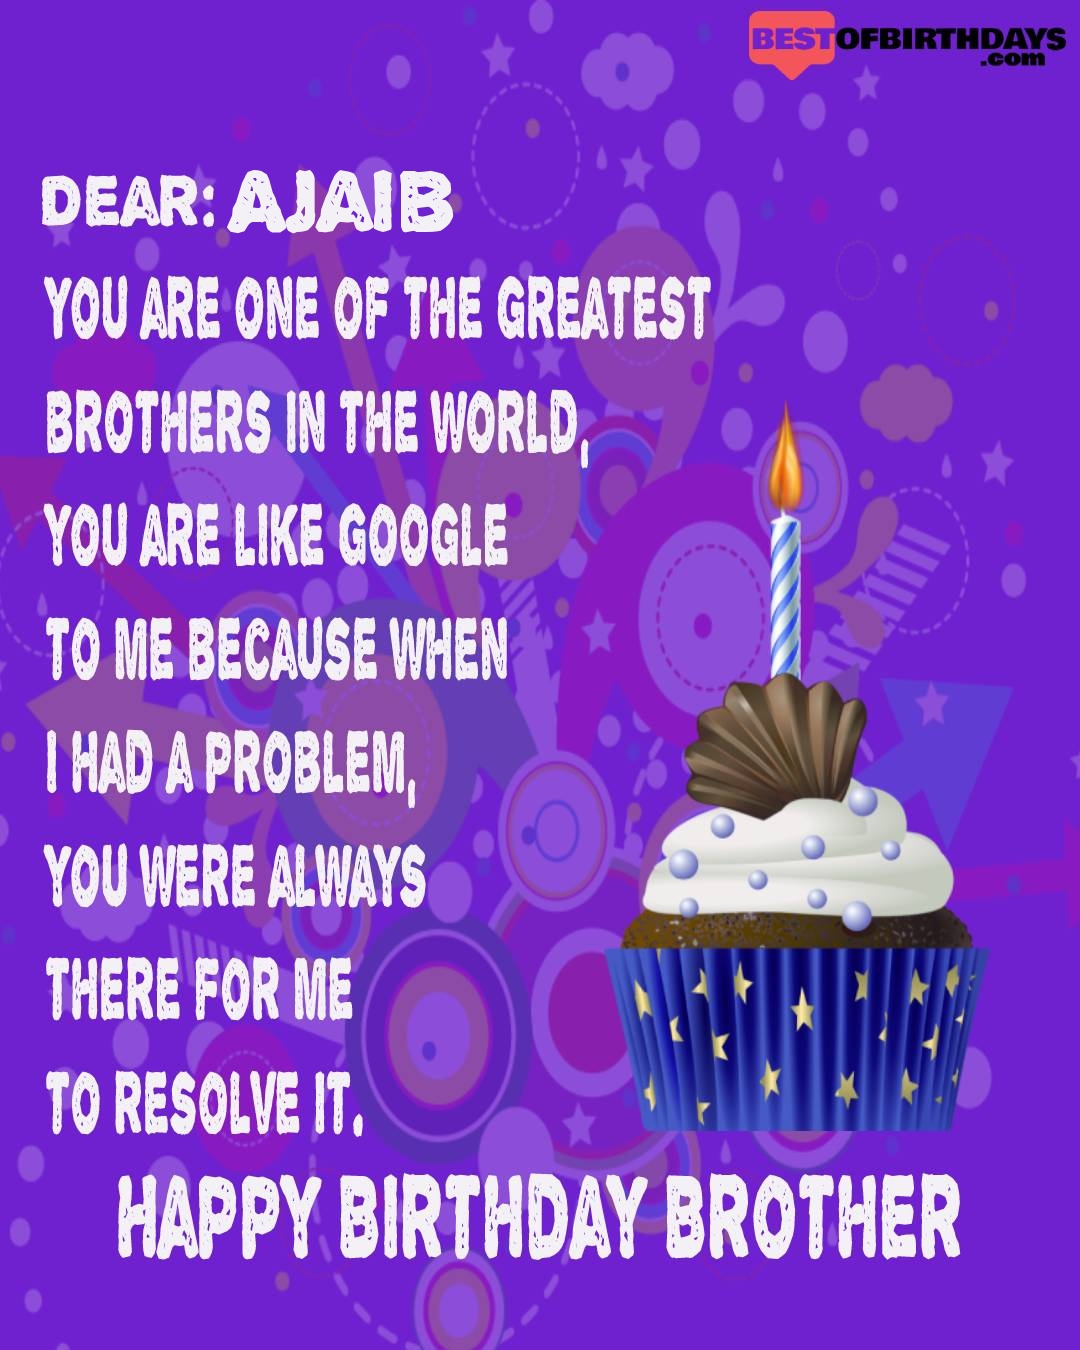 Happy birthday ajaib bhai brother bro